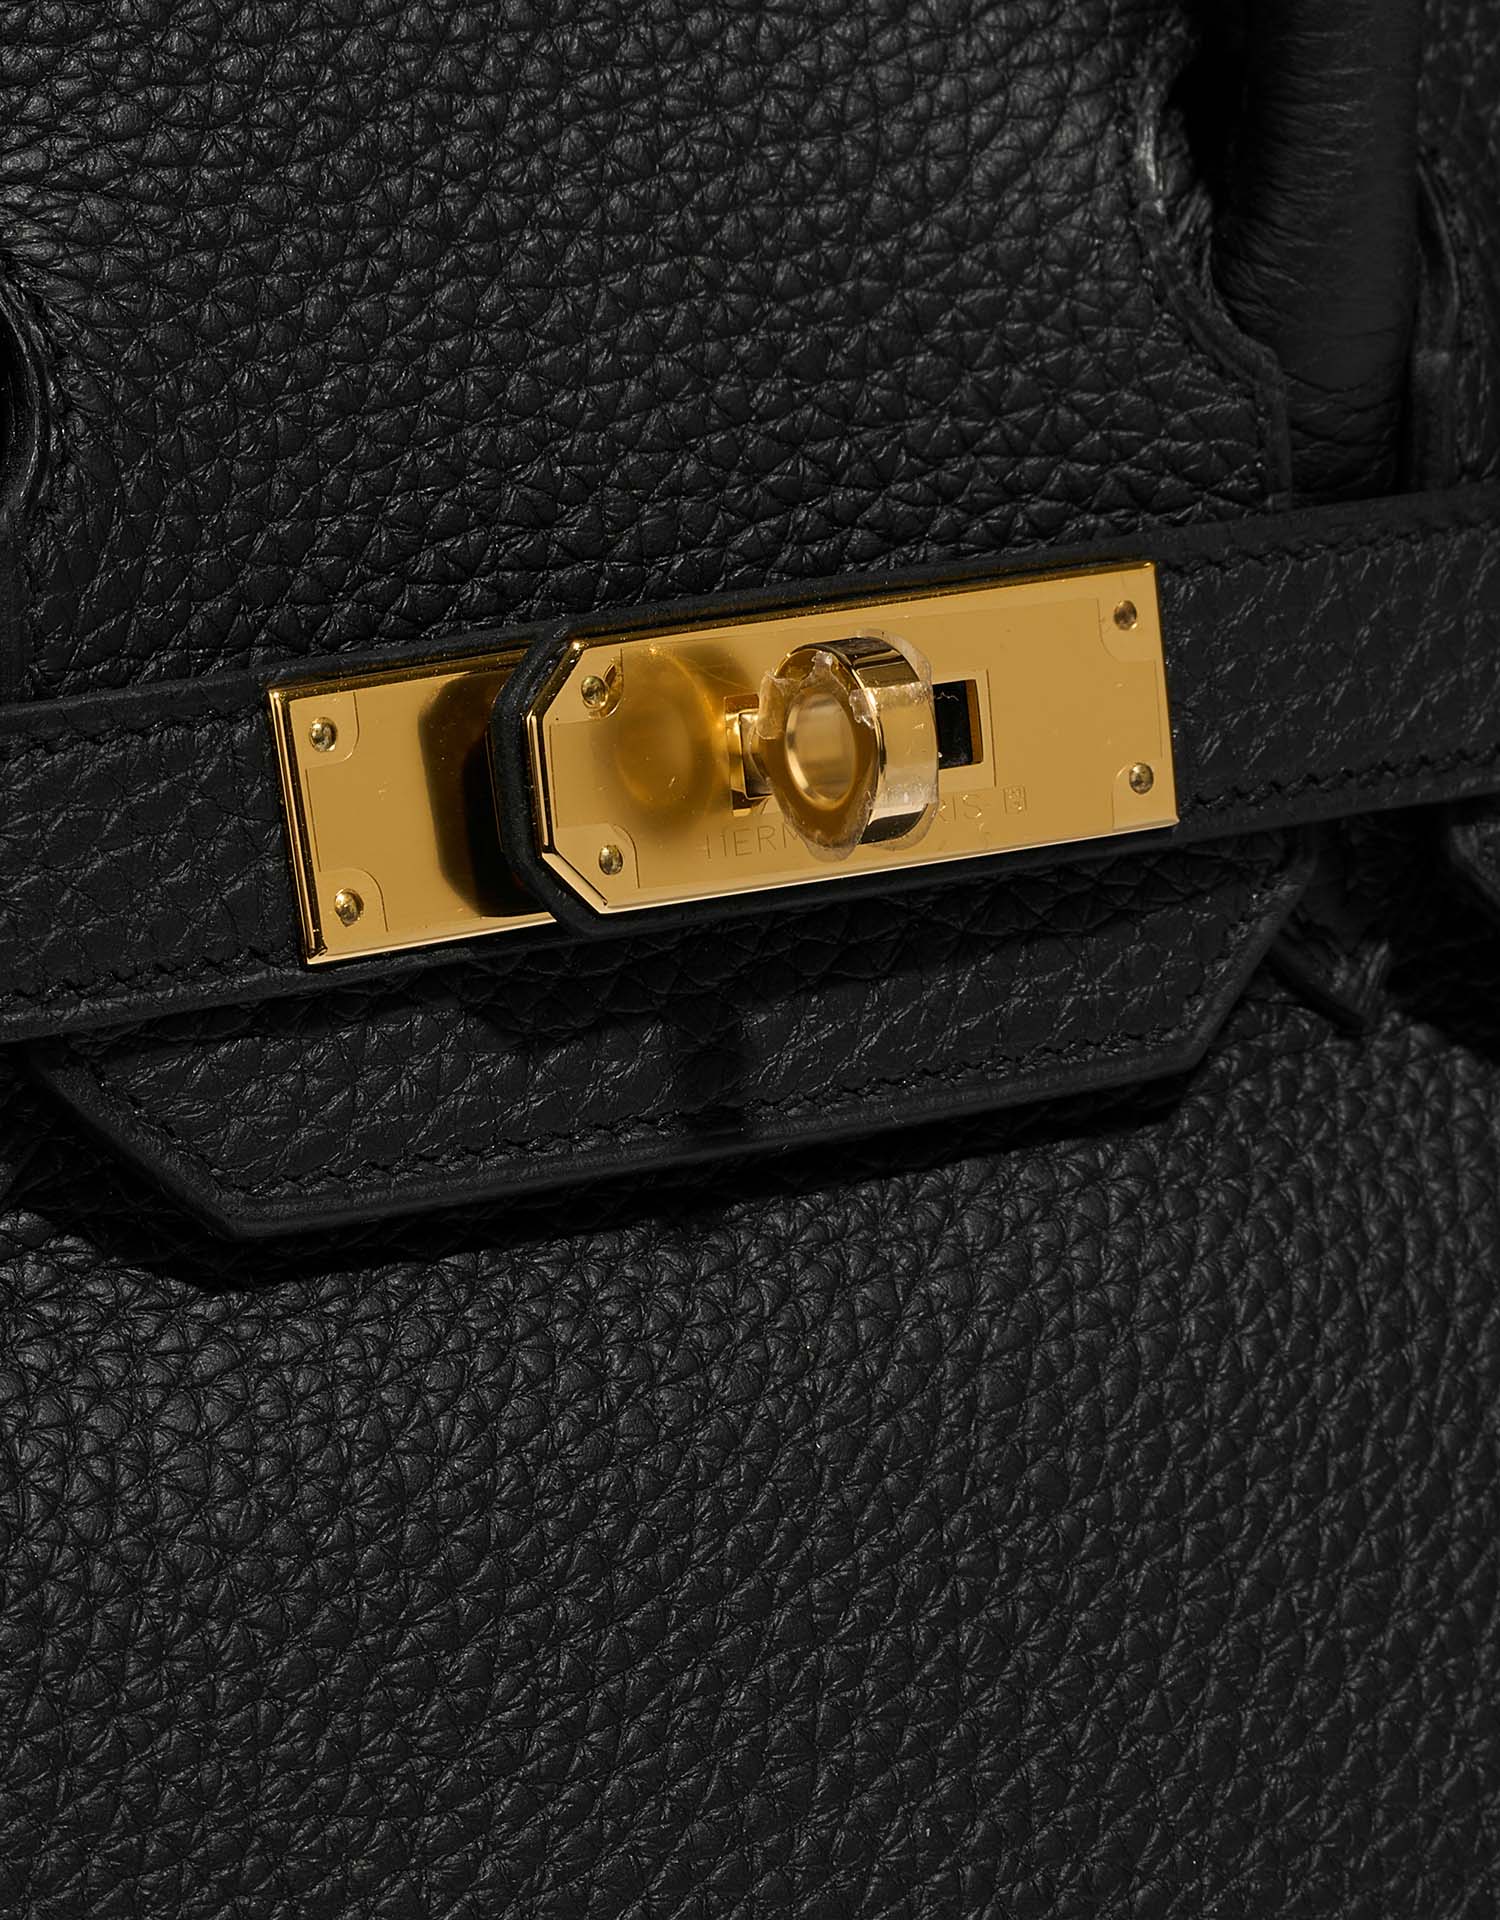 Hermès Authenticated Birkin 30 Leather Handbag